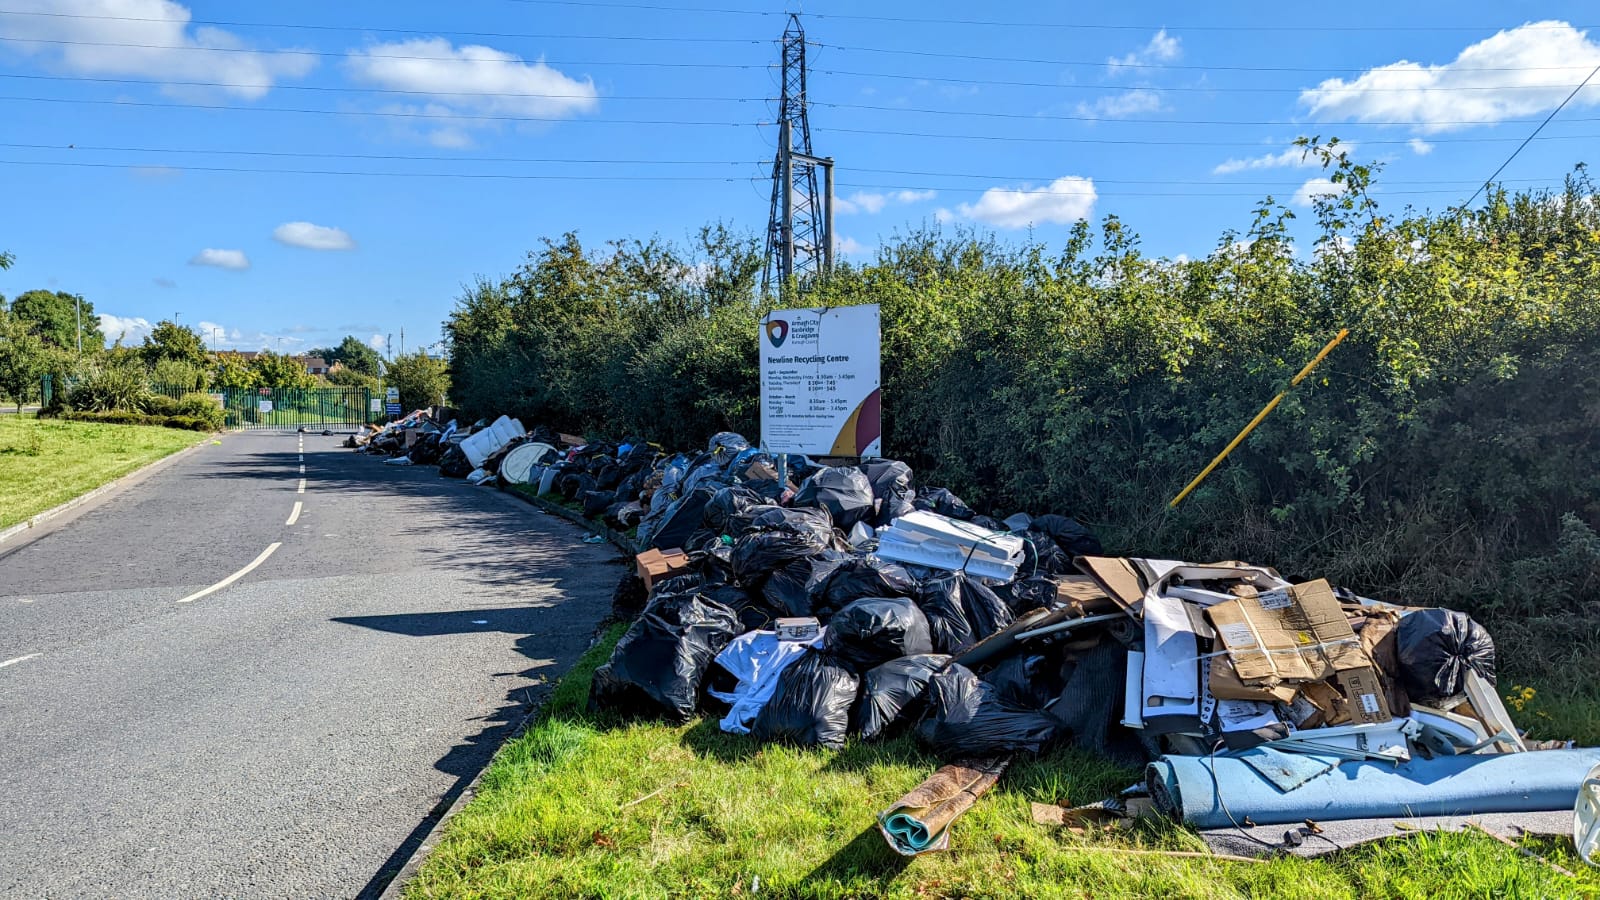 Lurgan New Line Recycling Centre rubbish bins strike